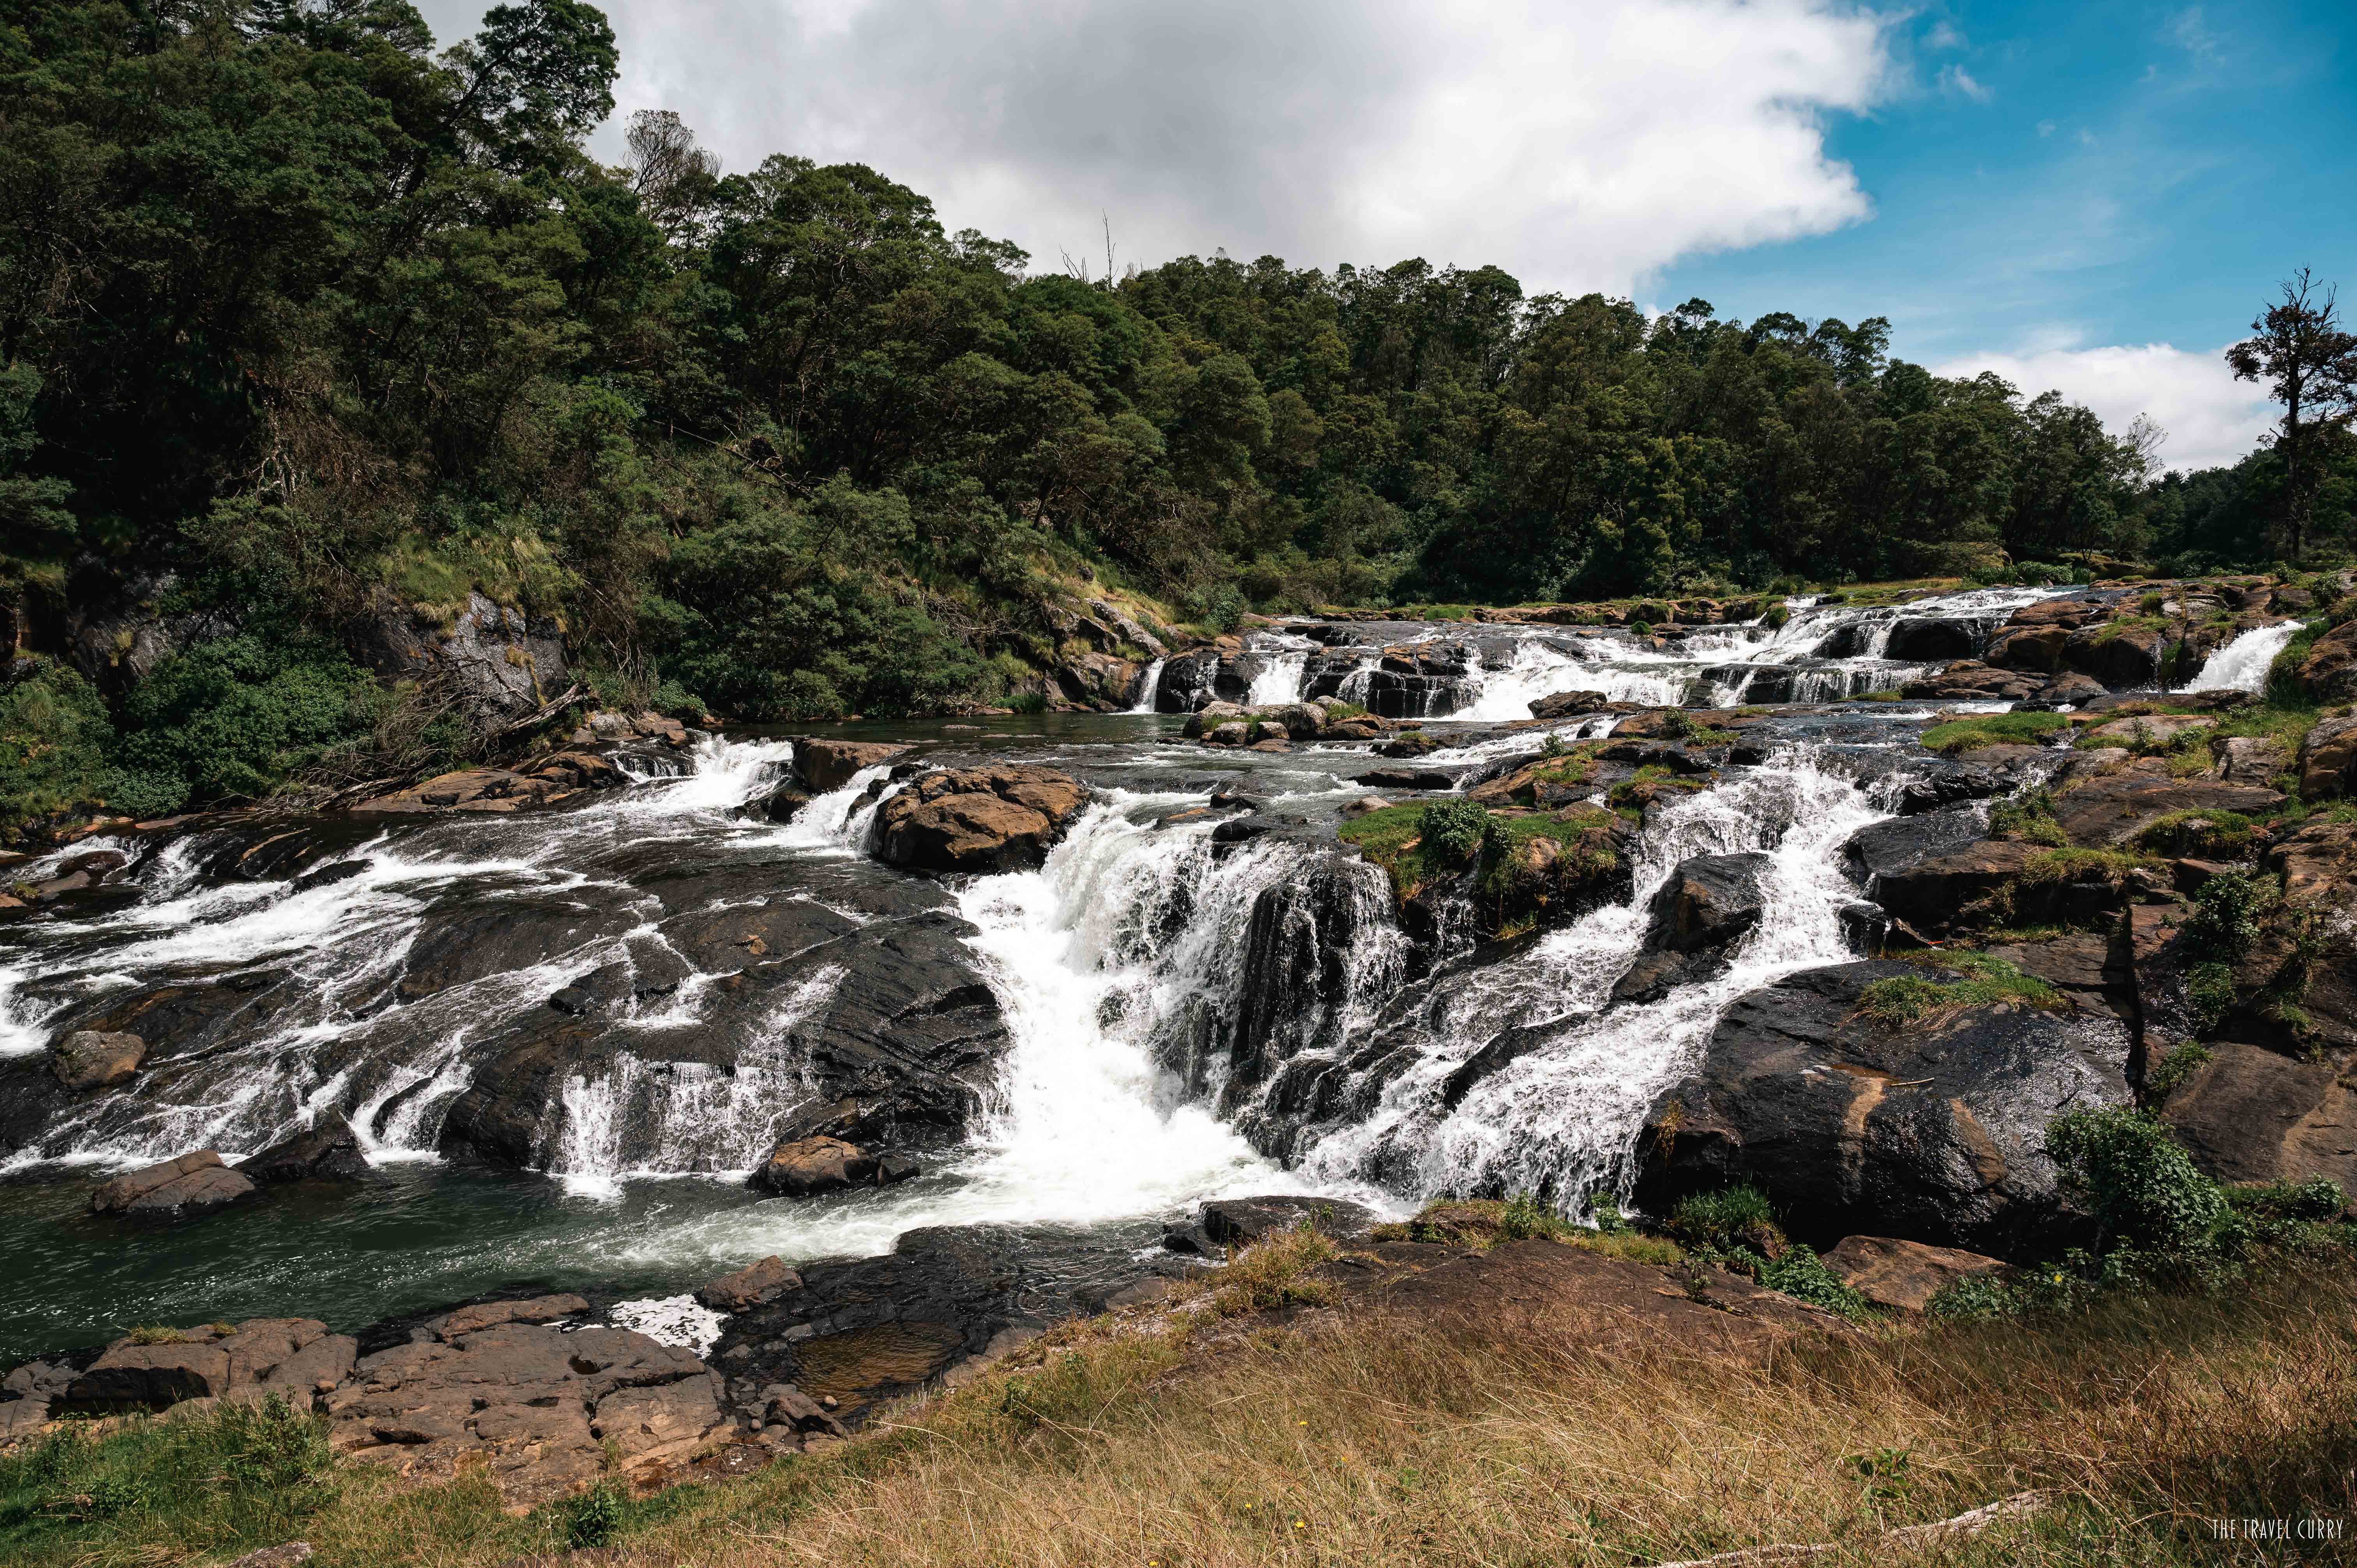 21km from Ooty- The beautiful Paykara Waterfall